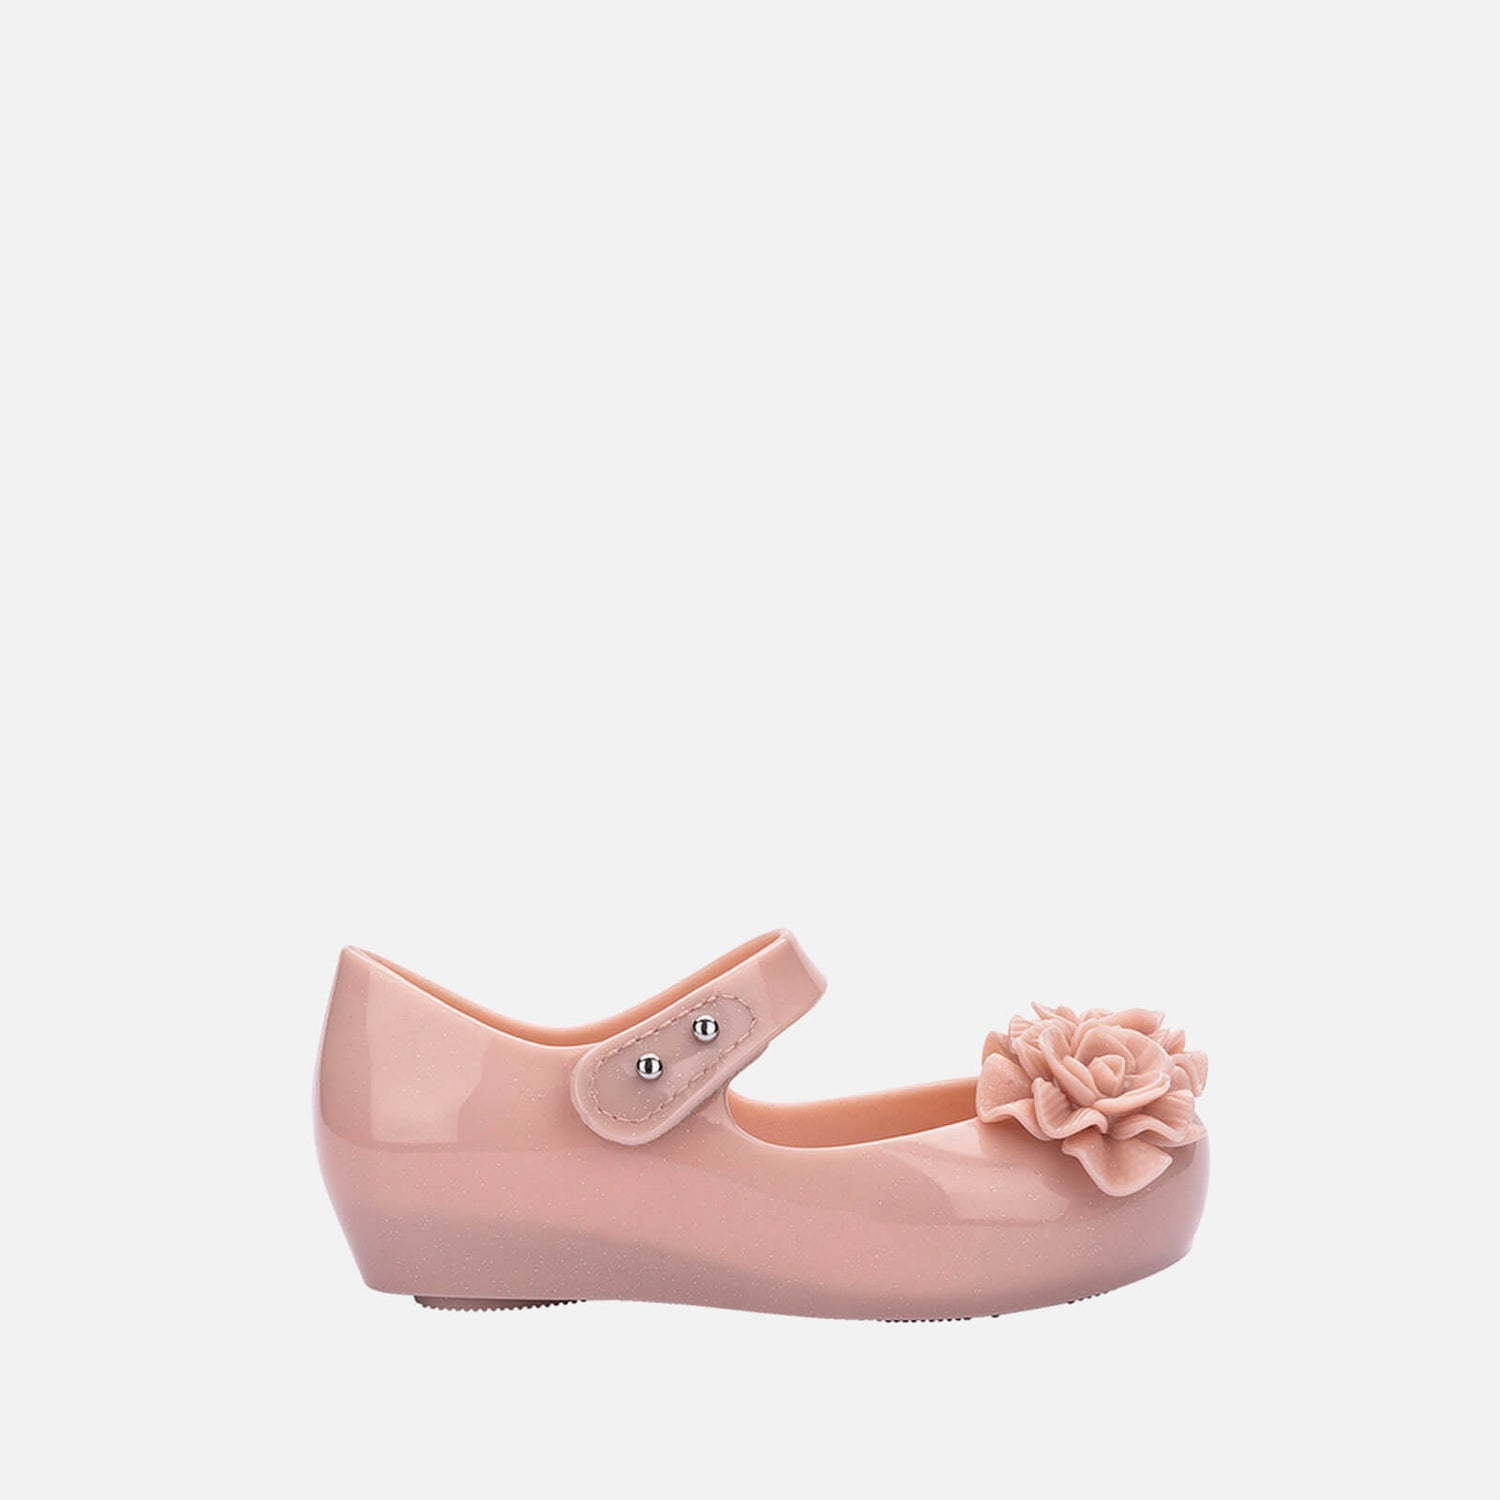 Mini Melissa Girls' Ultragirl Garden Ballet Flat Sandals - Pink - UK 3-4 Baby